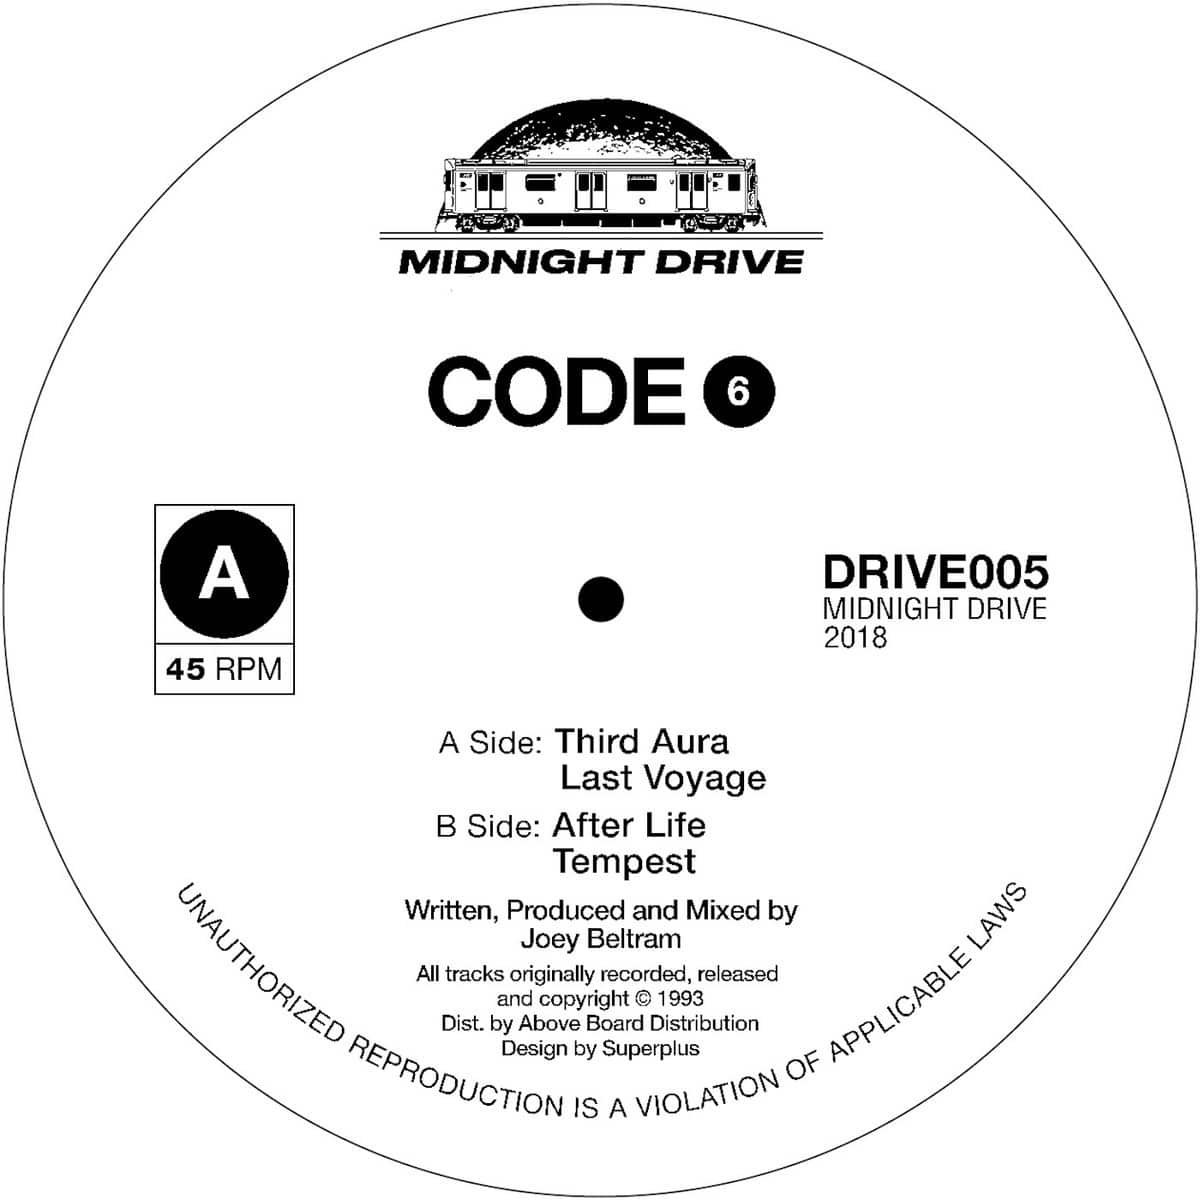 Code 6 / joey beltram - untitled ep - DRIVE005 - midnight drive